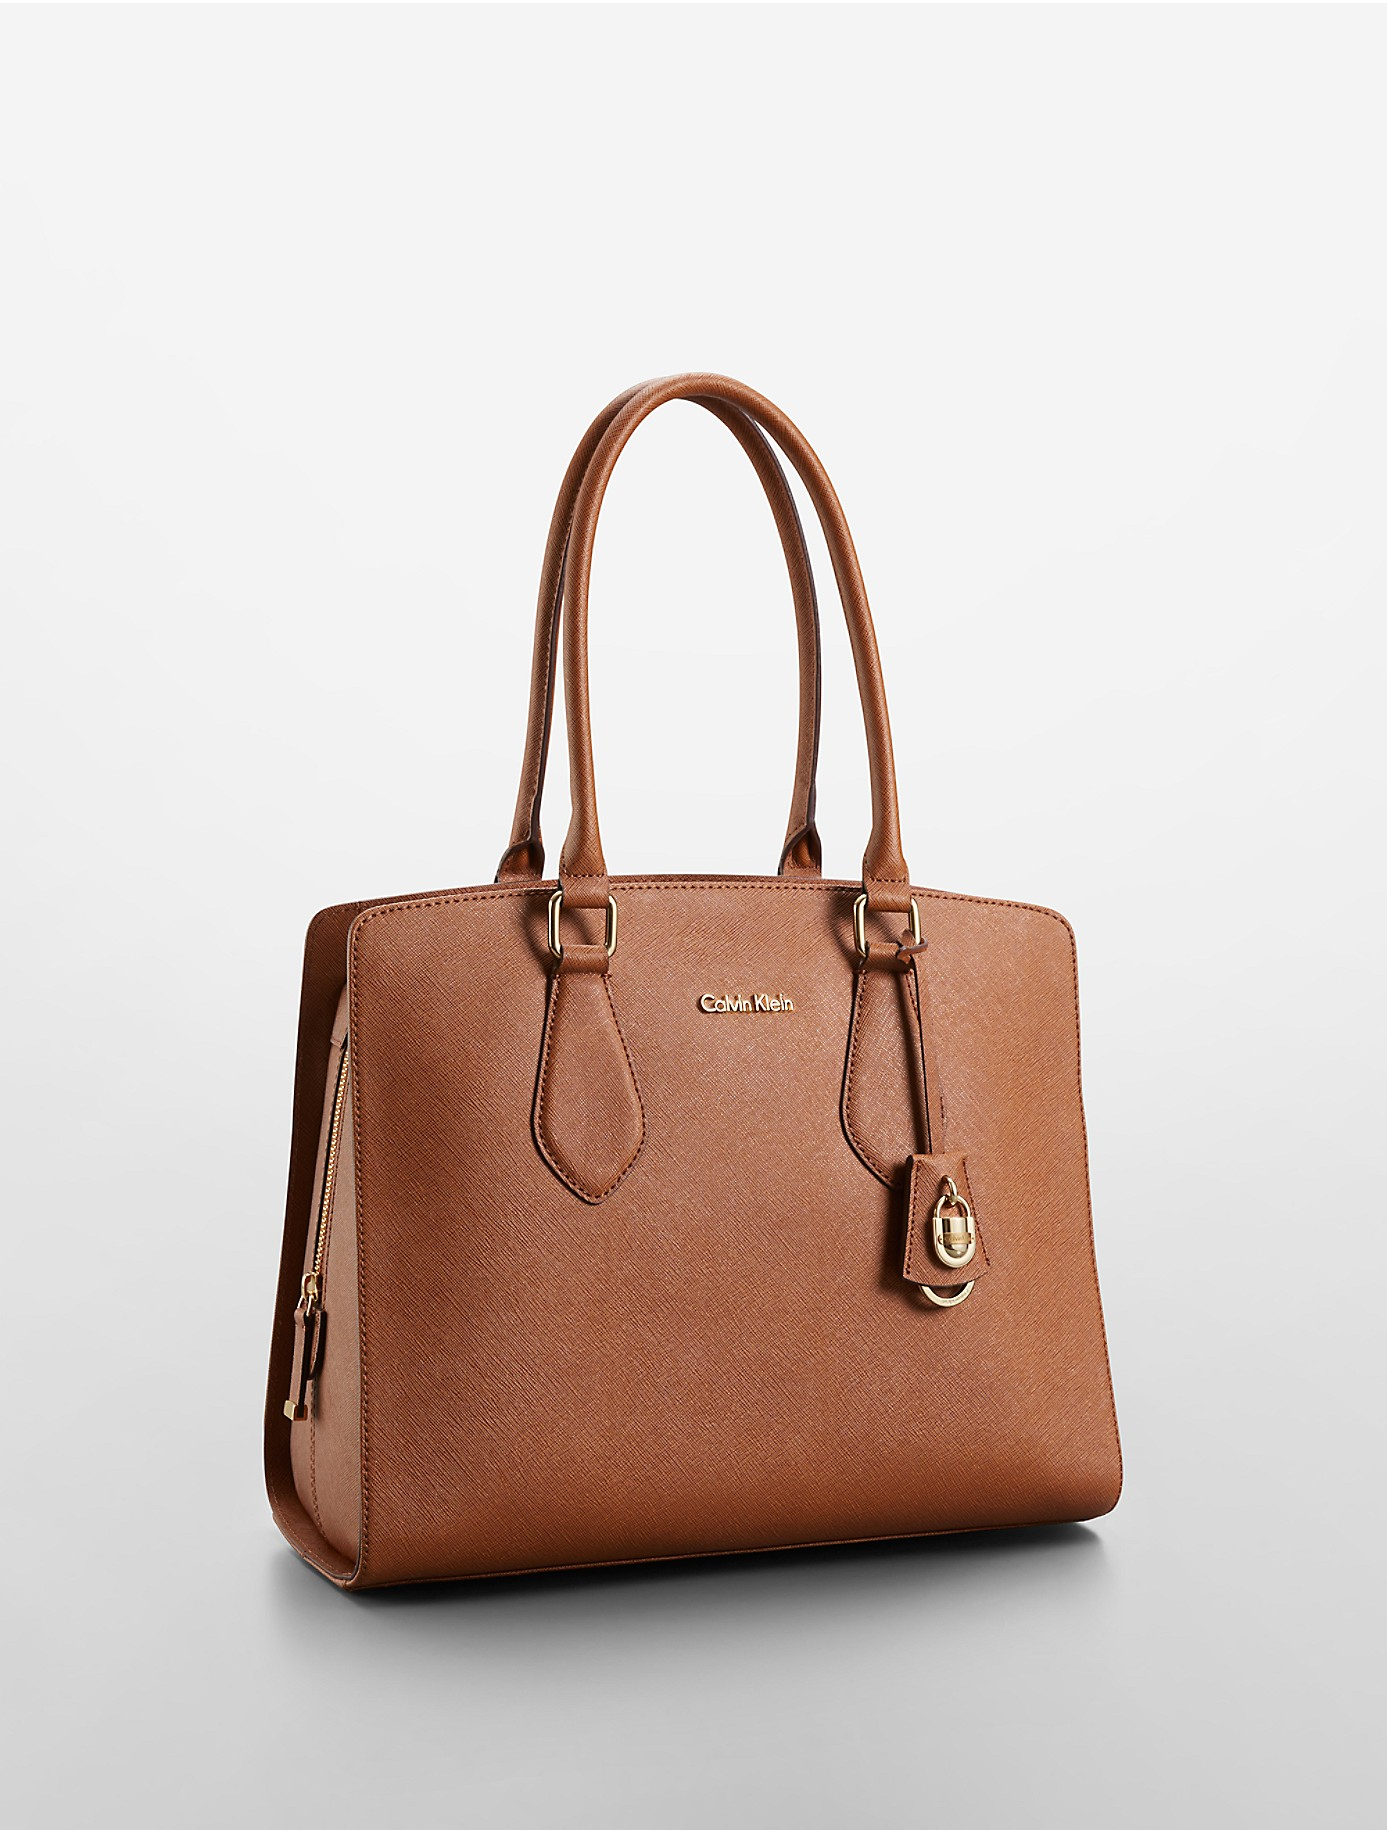 Lyst - Calvin Klein Modena Saffiano Leather Tote Bag in Brown